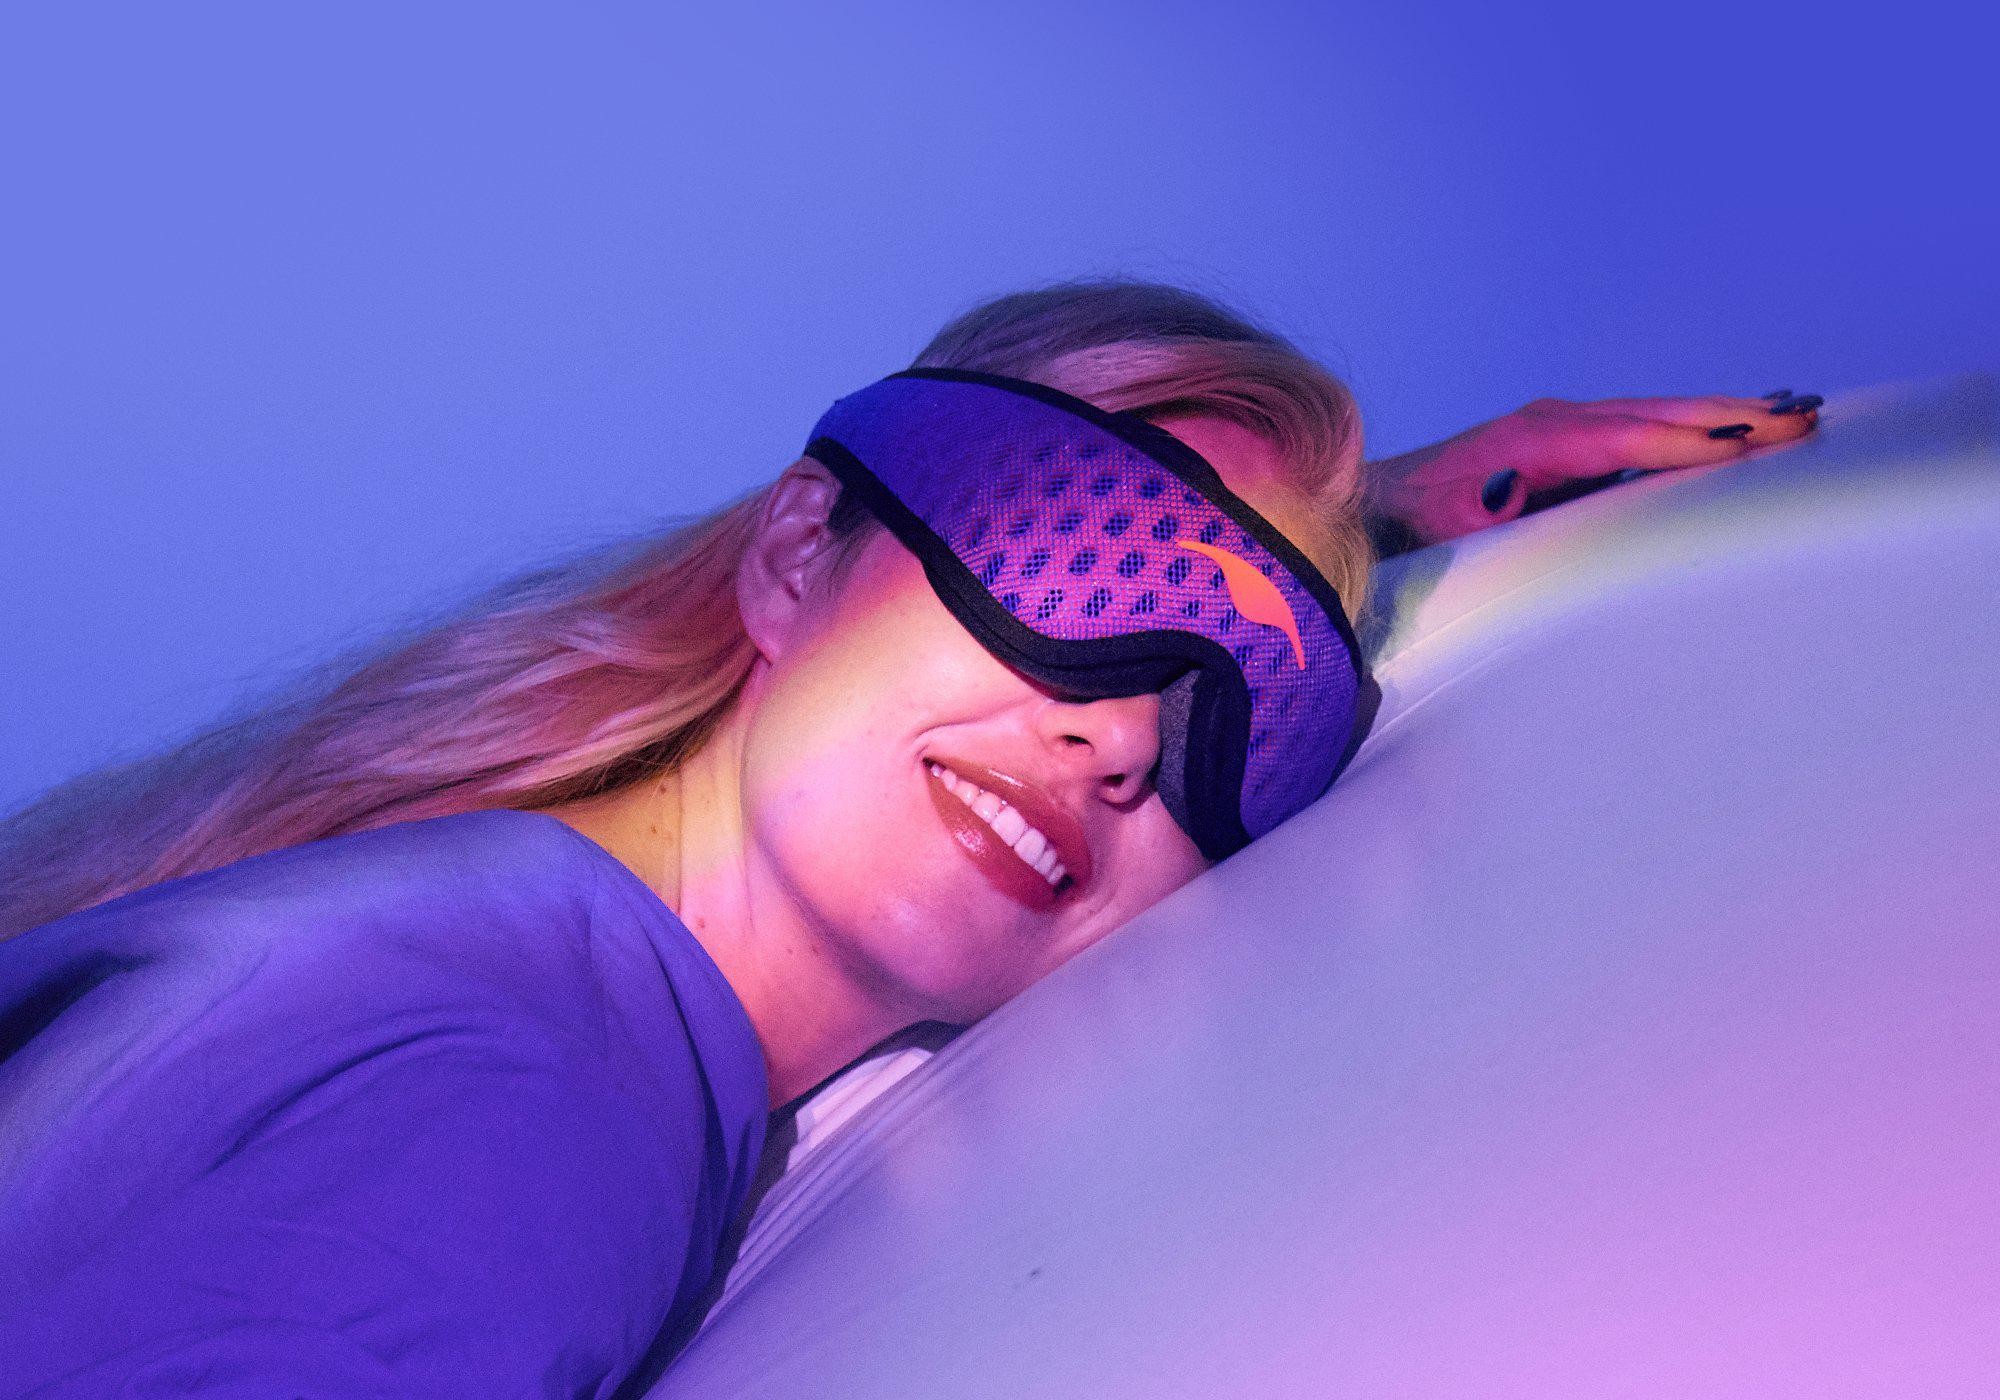 A blonde smiling girl sleeping on her side wearing an eye mask.